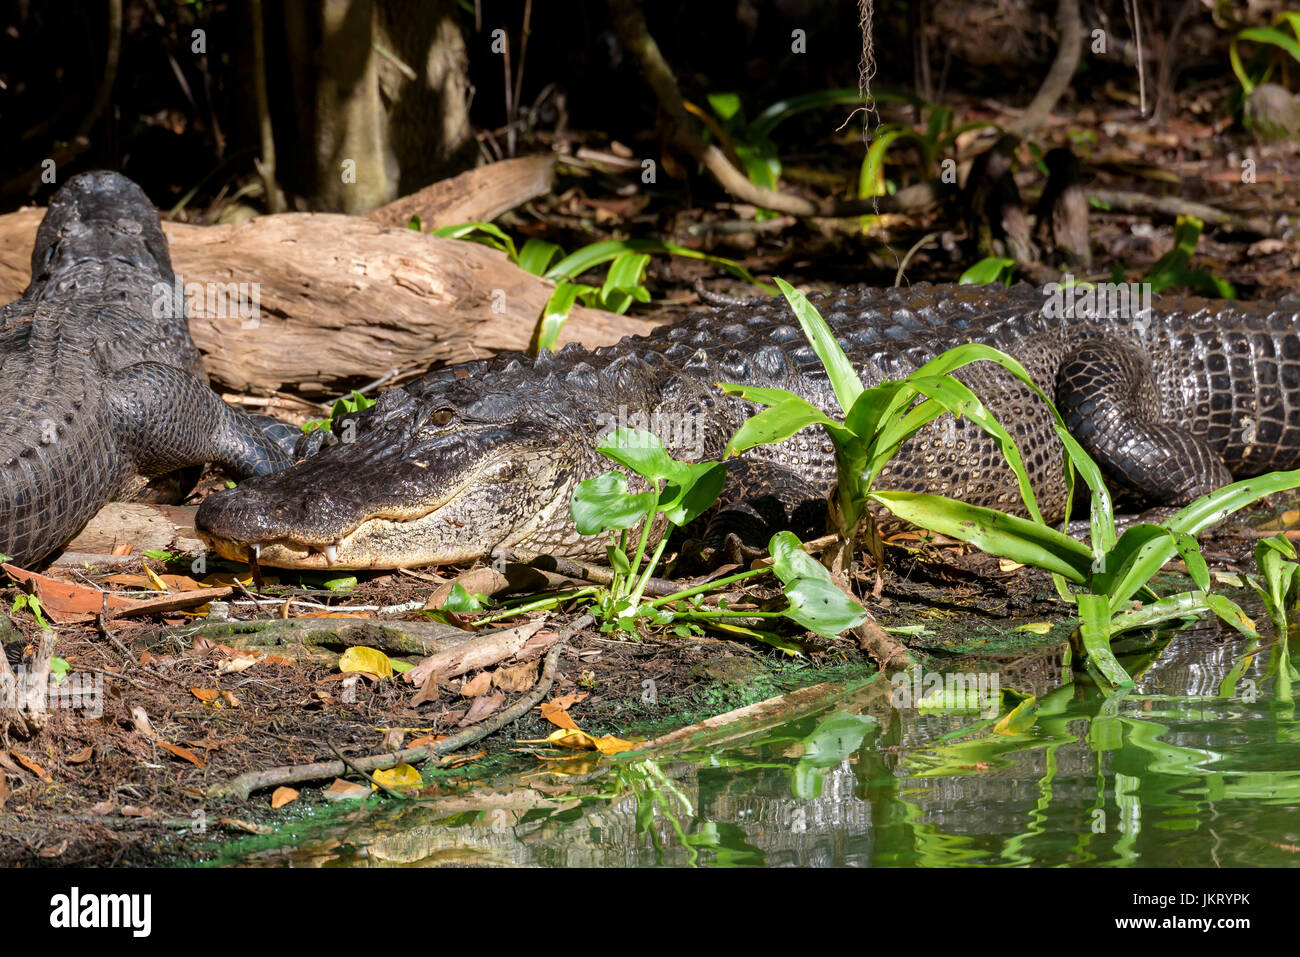 American alligators (Alligator mississippiensis), Big Cypress Bend, Fakahatchee Strand, Florida, USA Stock Photo